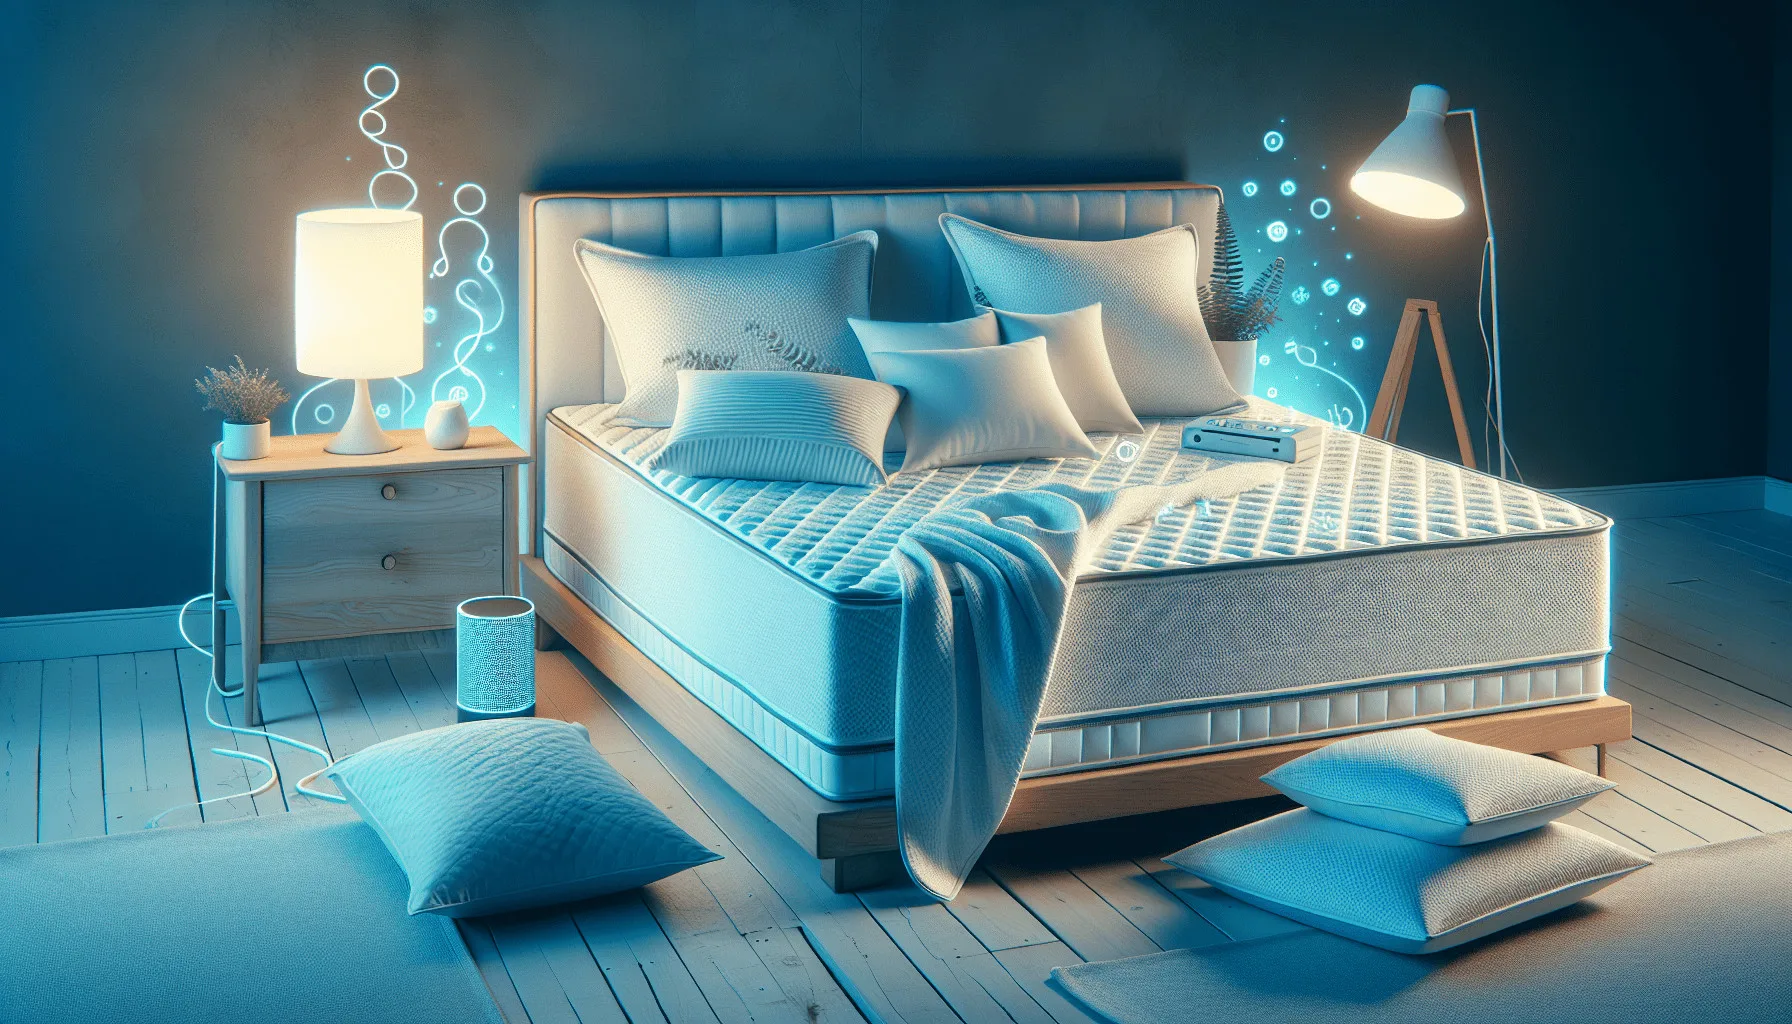 Sleeping Cool On A Memory Foam Mattress: Tips And Tricks